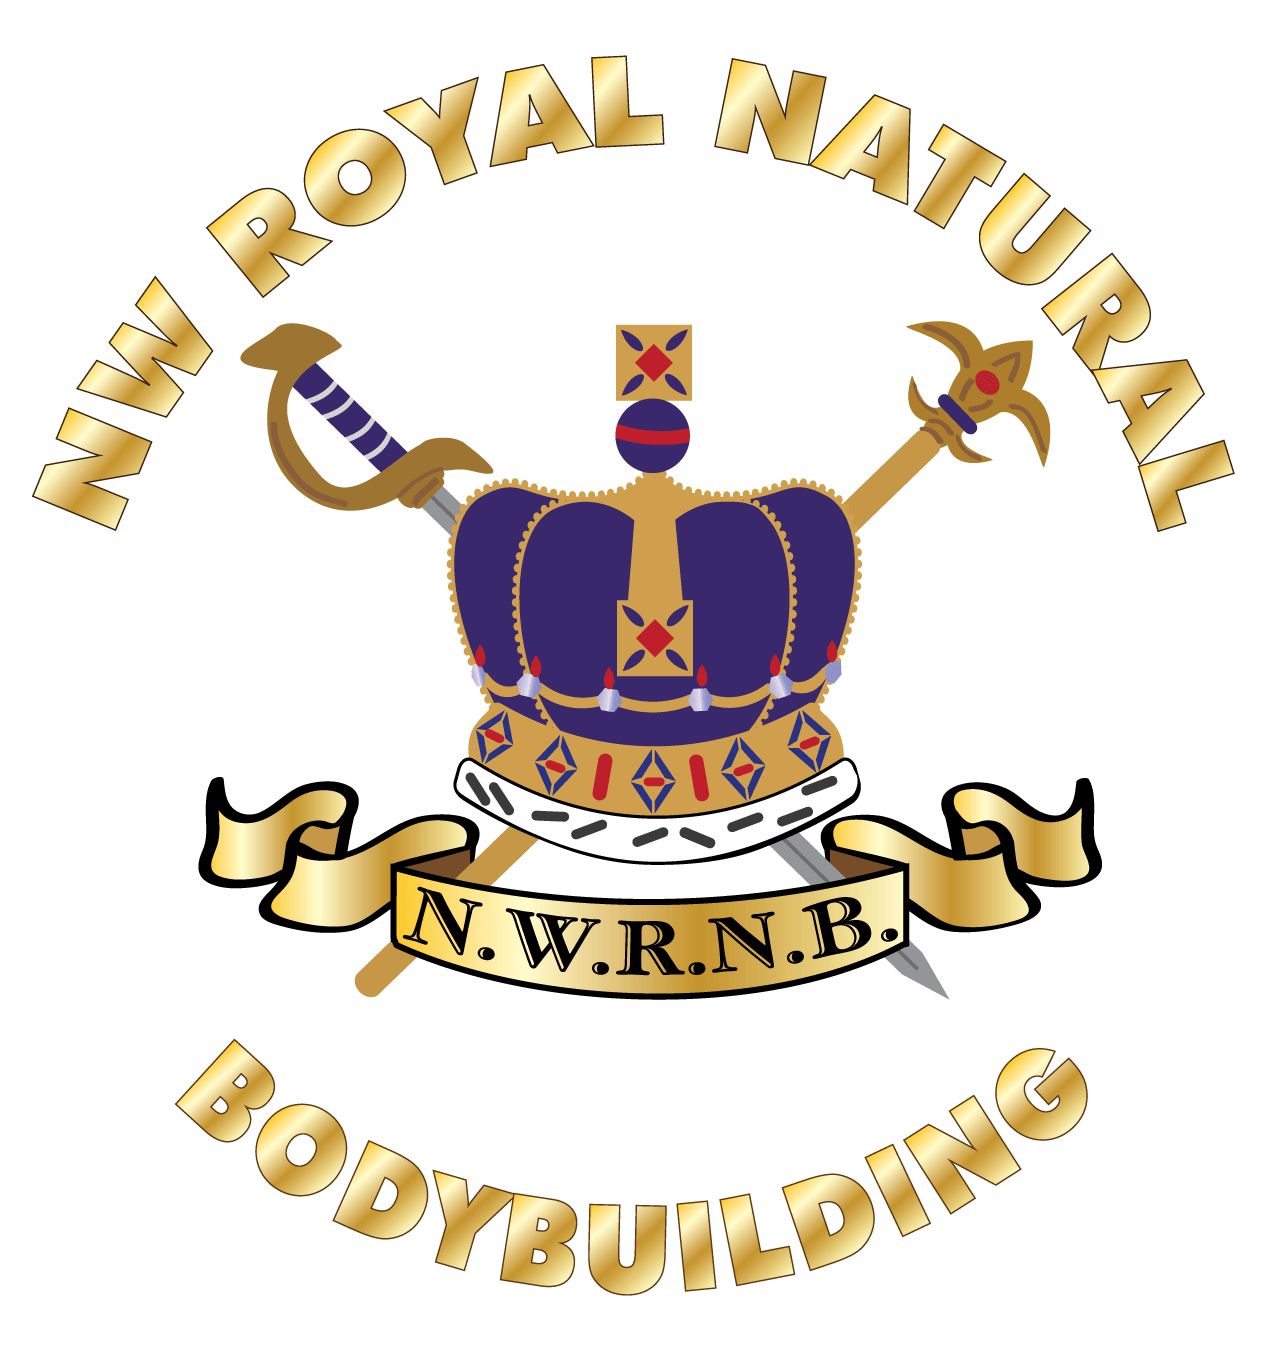 North West Royal Bodybuilding Championships